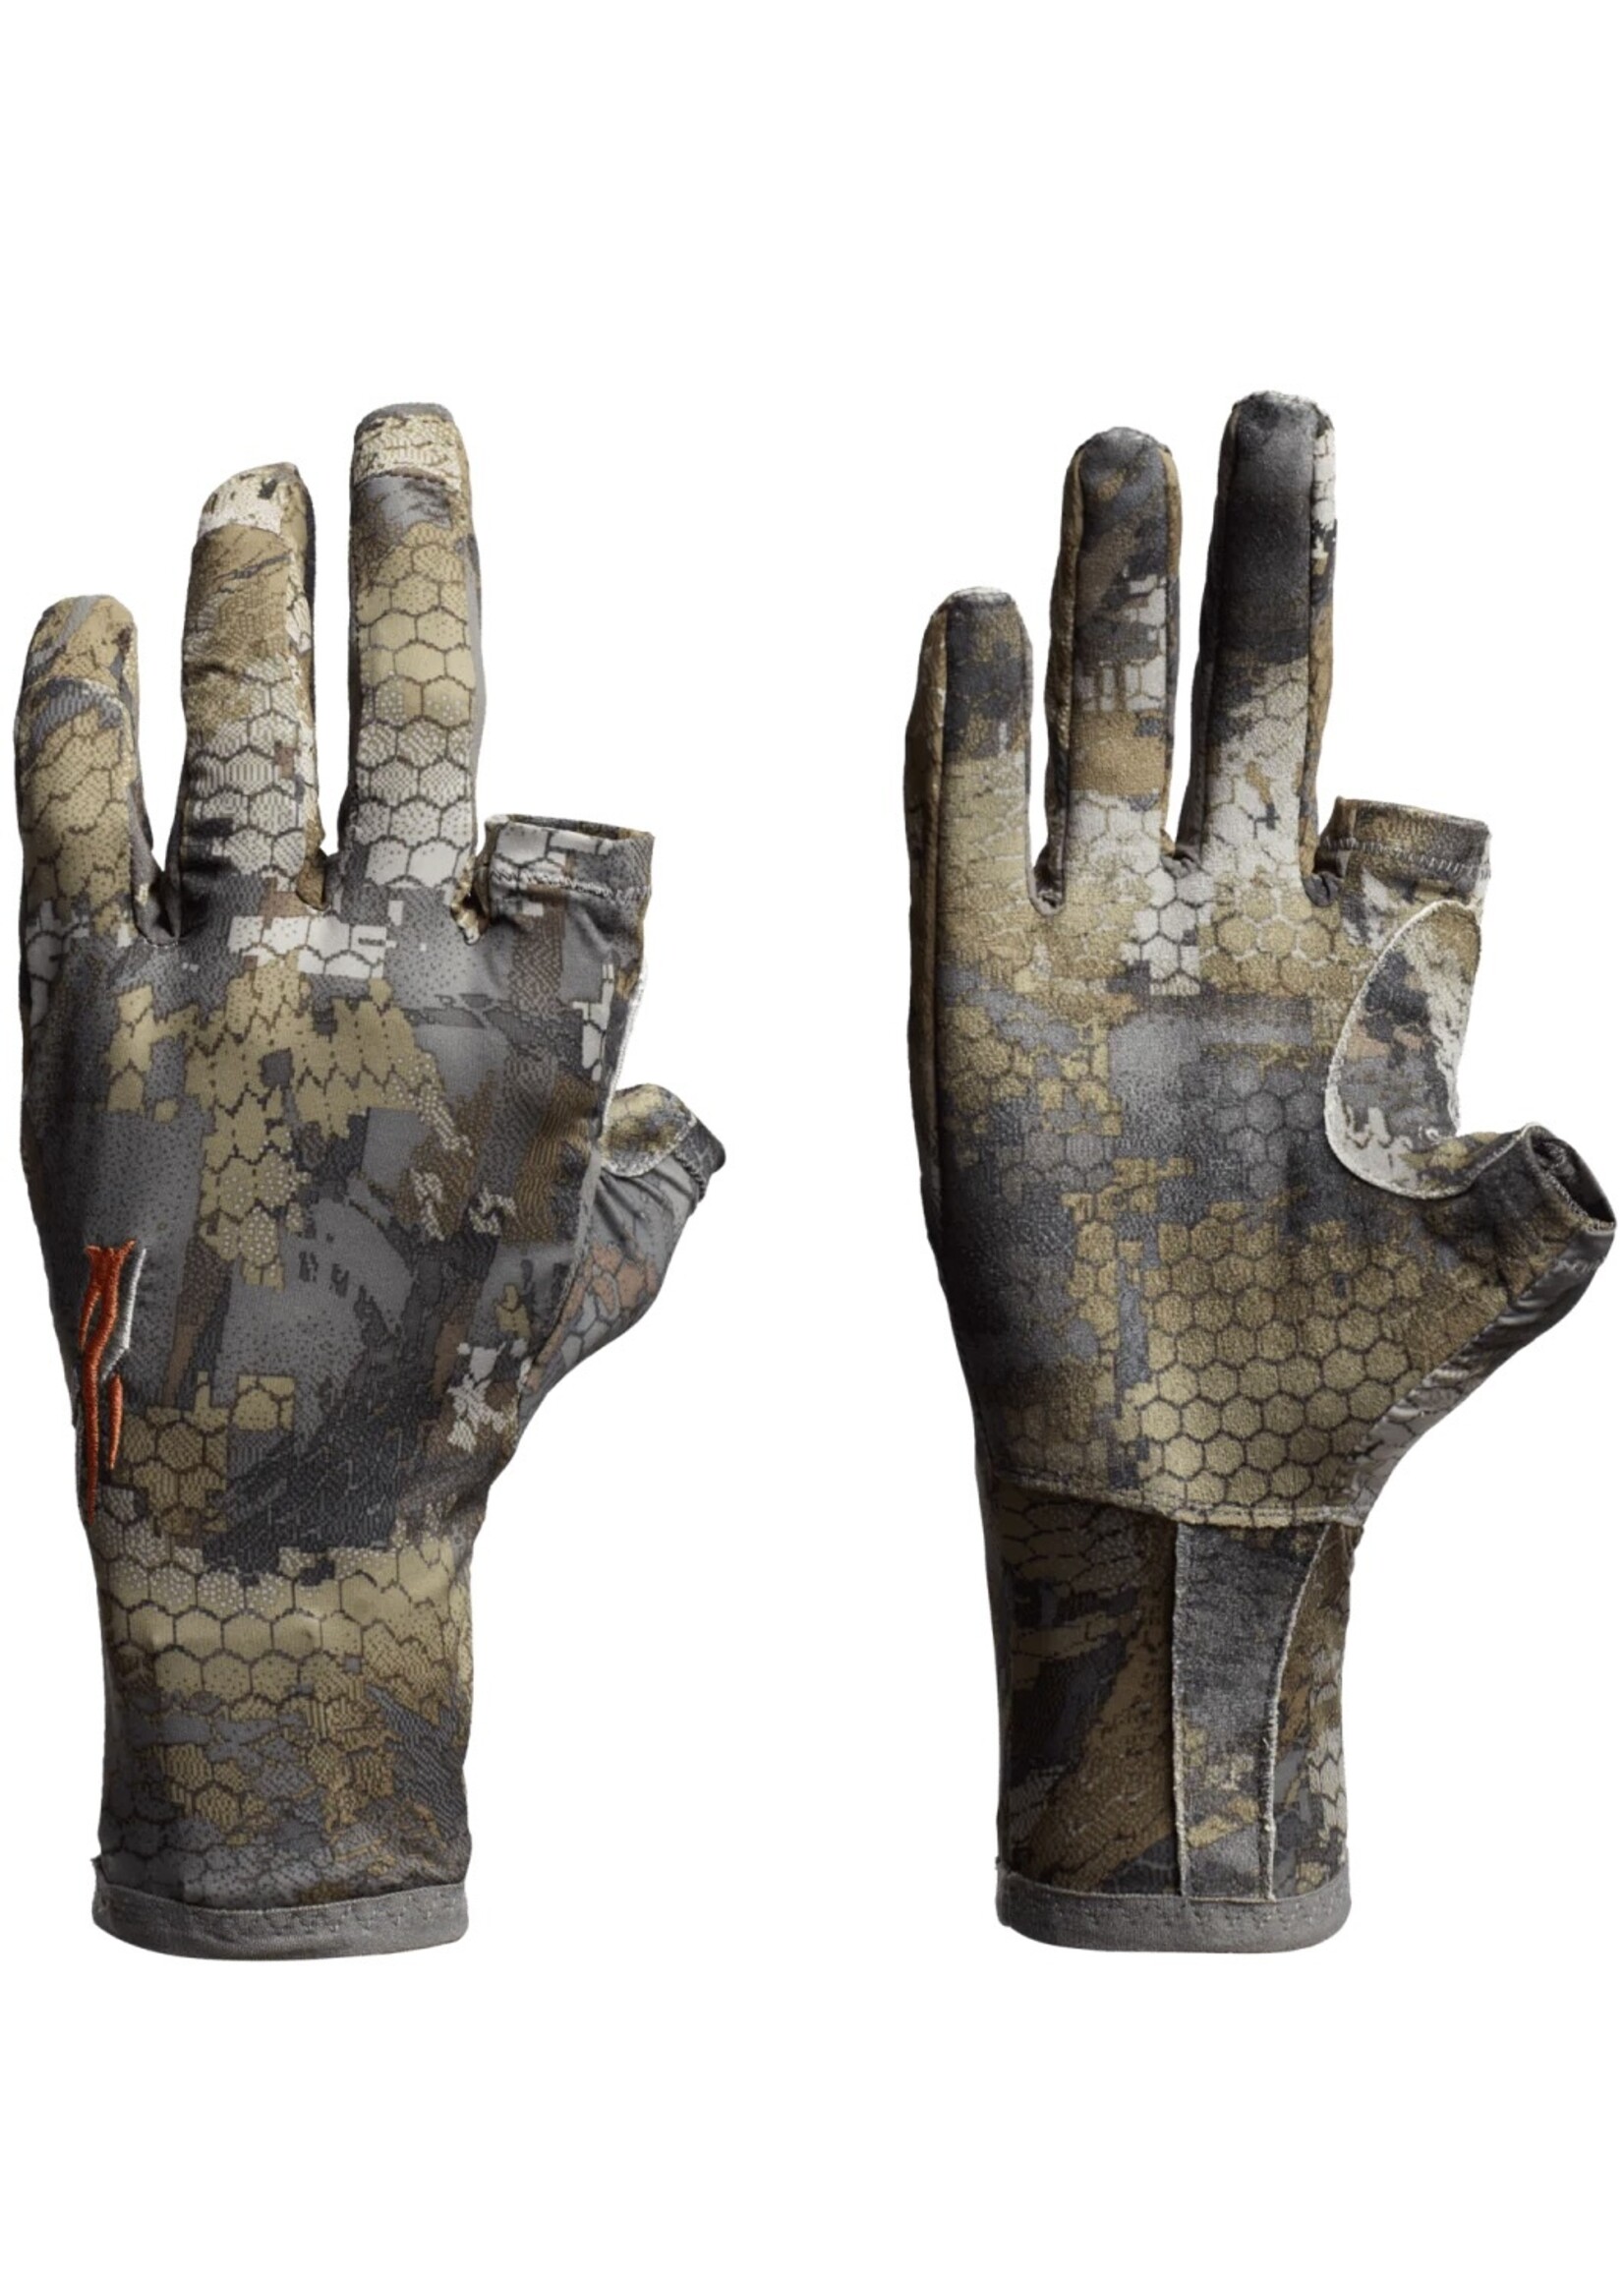 Sitka Gear Equinox Guard Glove